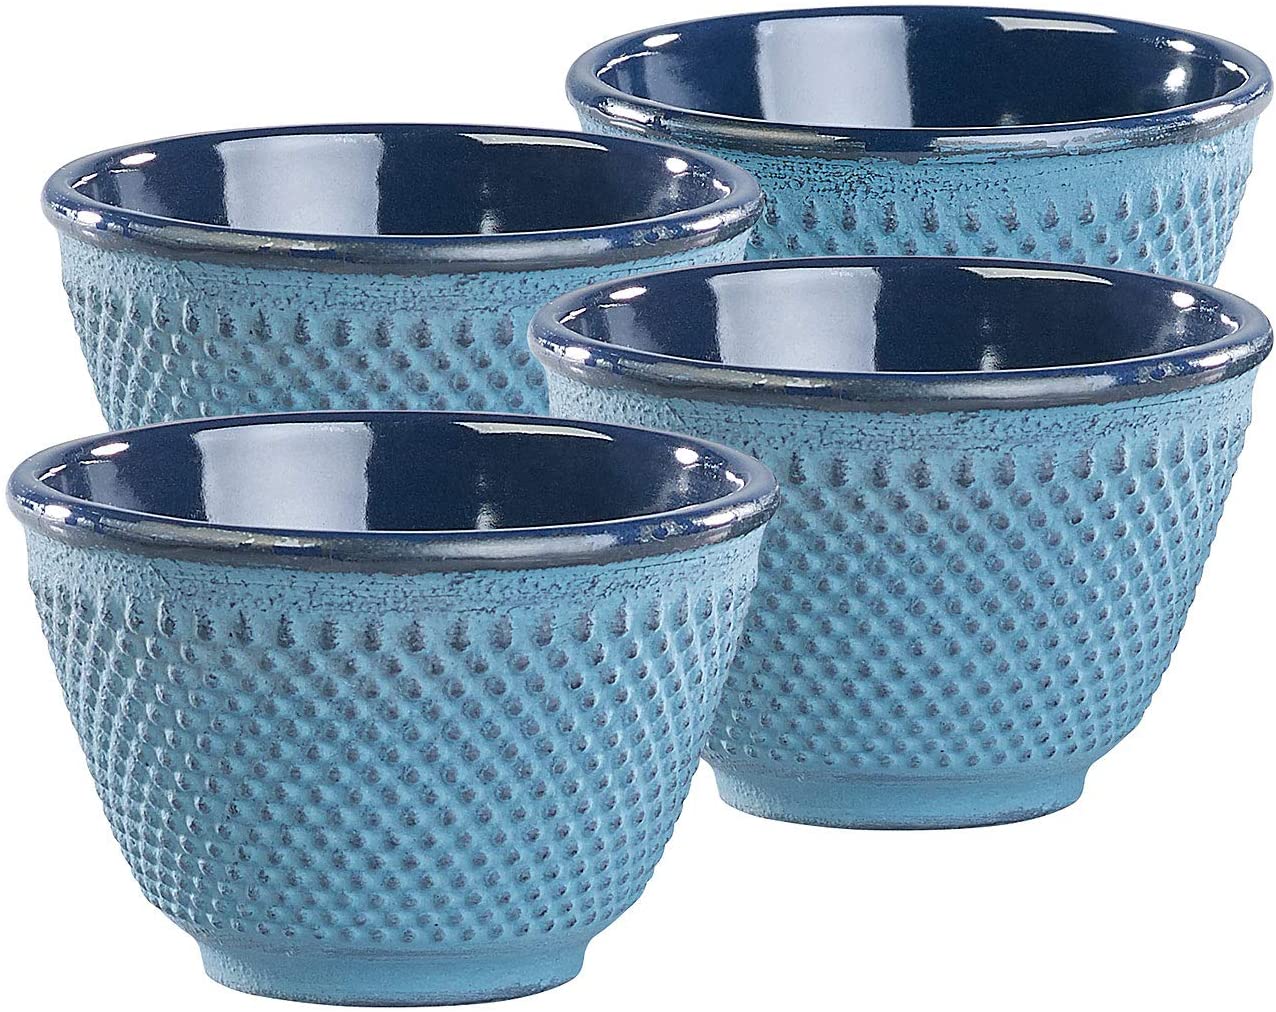 Rosenstein & Söhne Japanese tea bowl: set of 4 Asian tea cups made of cast iron and enamel, petrol blue (matcha tea bowls).